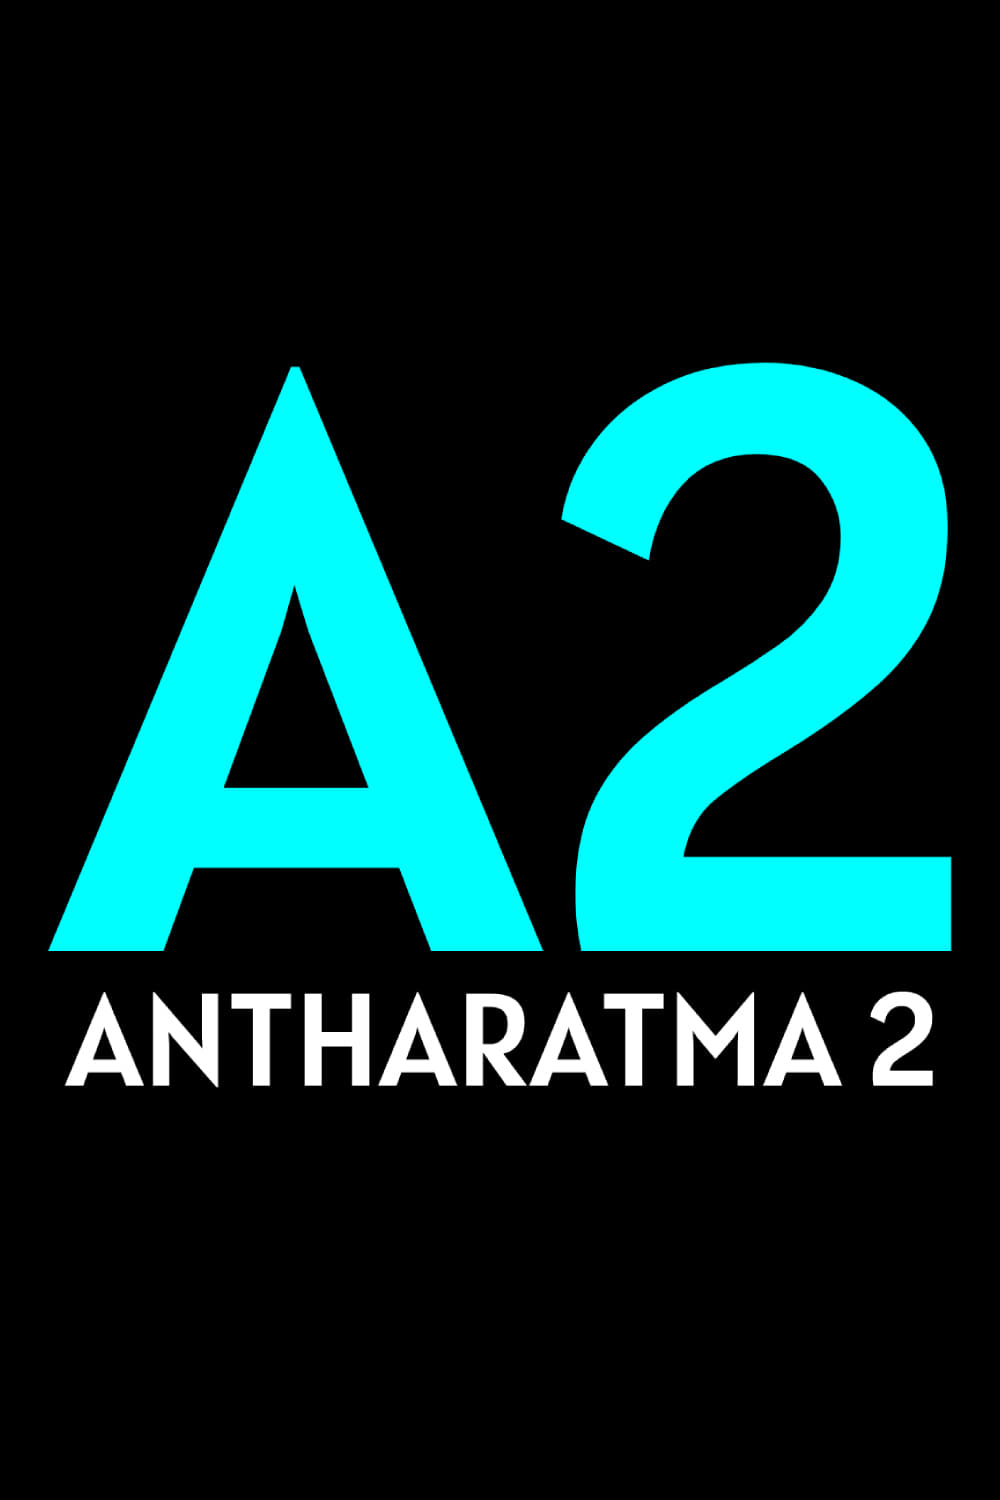 Antharatma 2